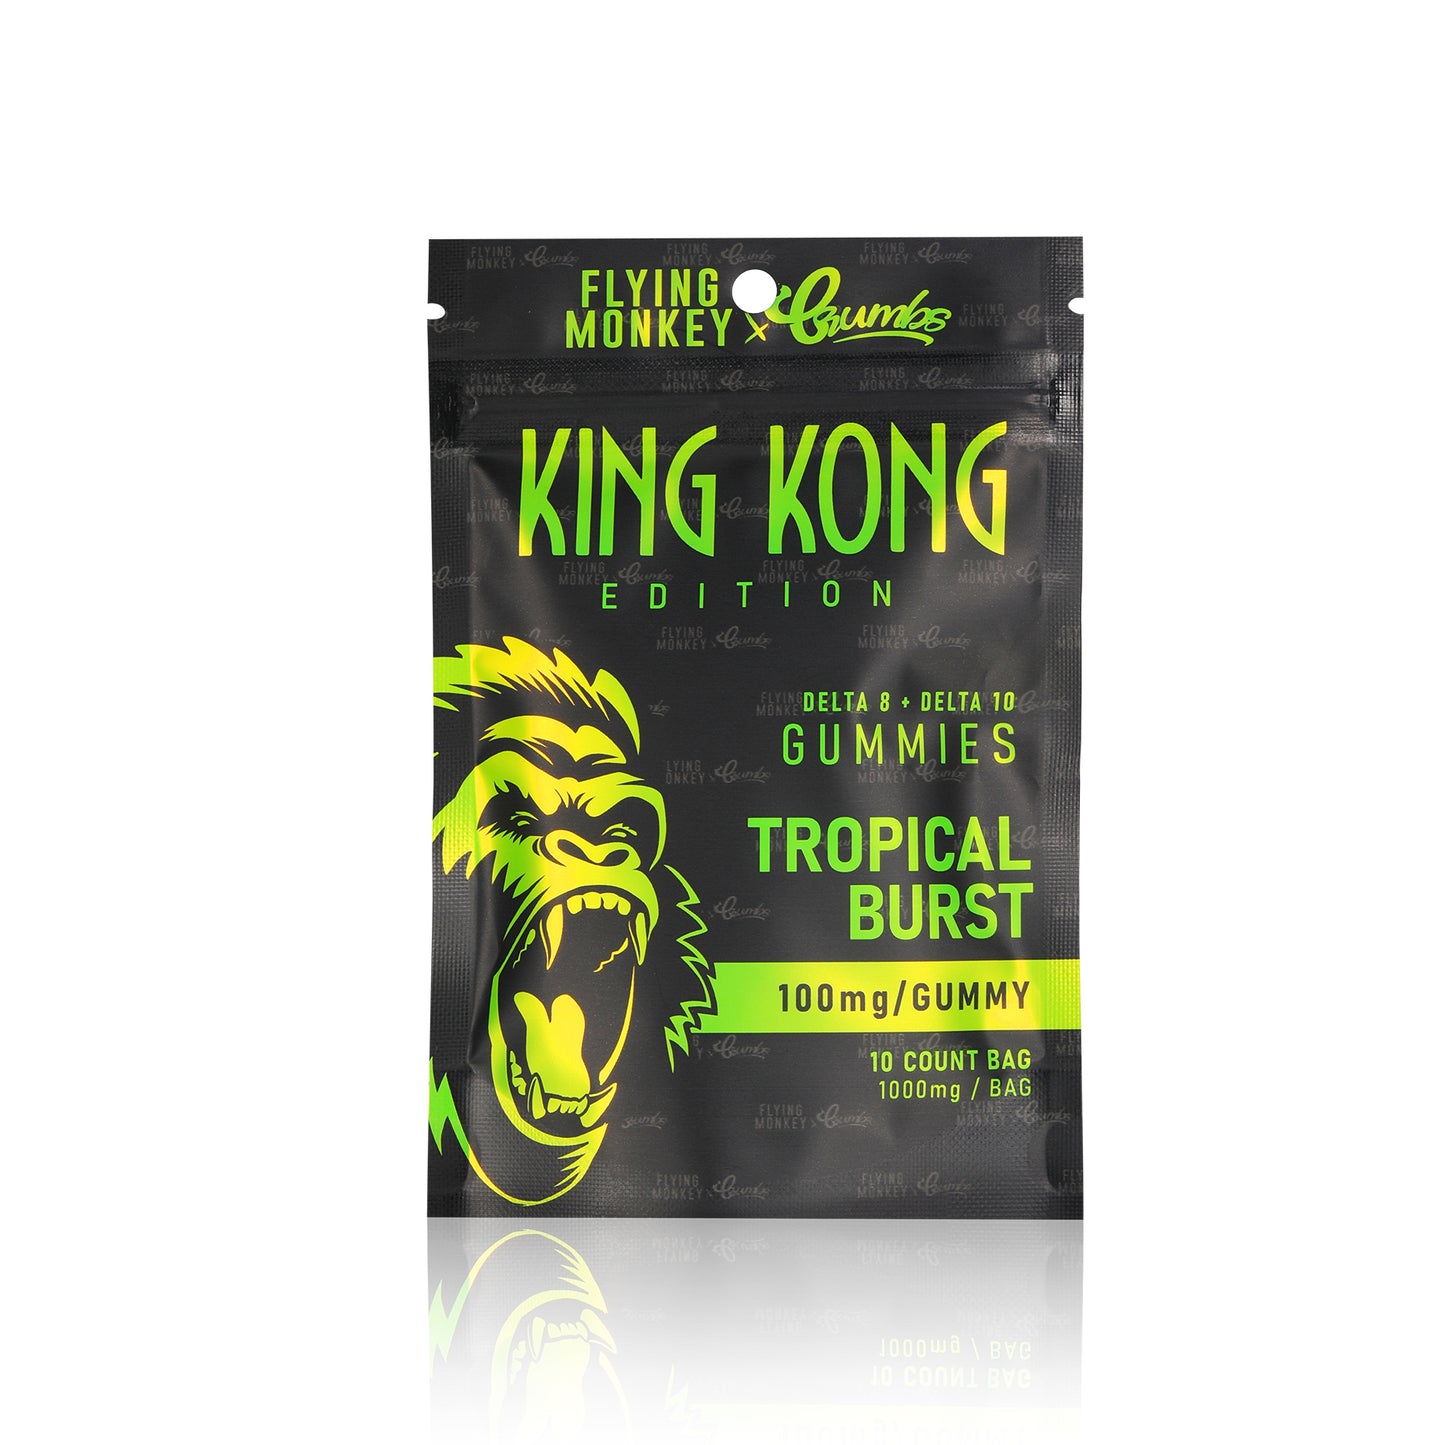 Flying Monkey King Kong 100mg gummy bag in Tropical Burst flavor